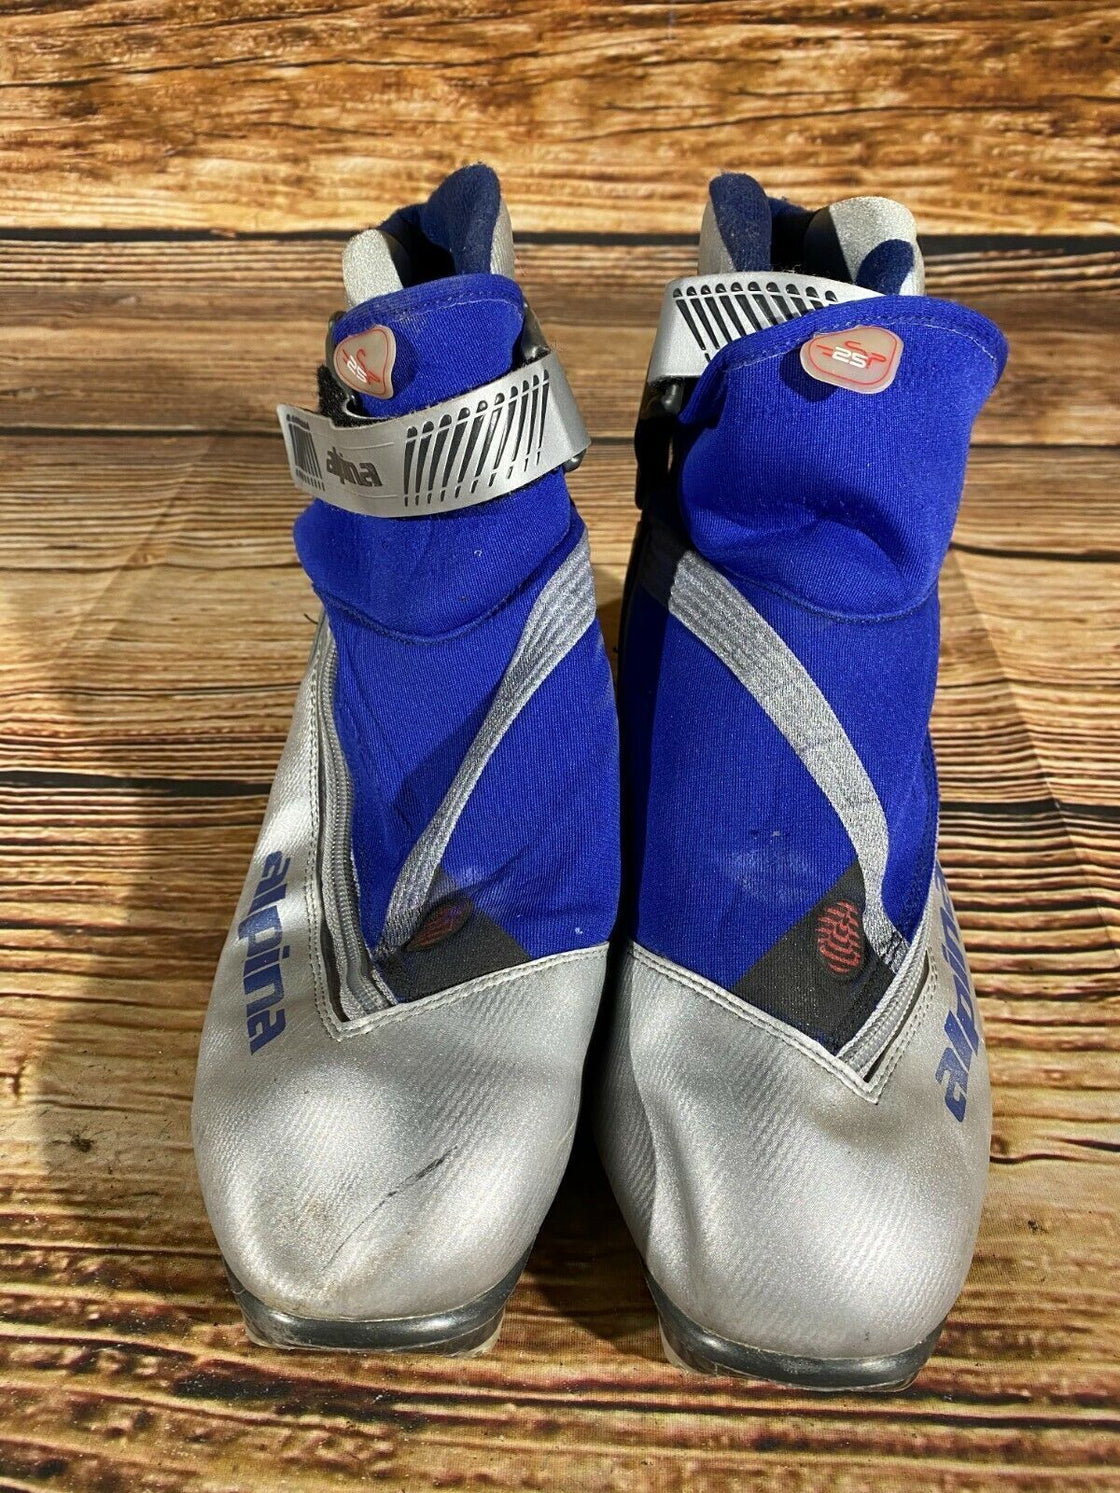 Alpina SP25 Nordic Cross Country Ski Boots Size EU44 US10.5 NNN bindings